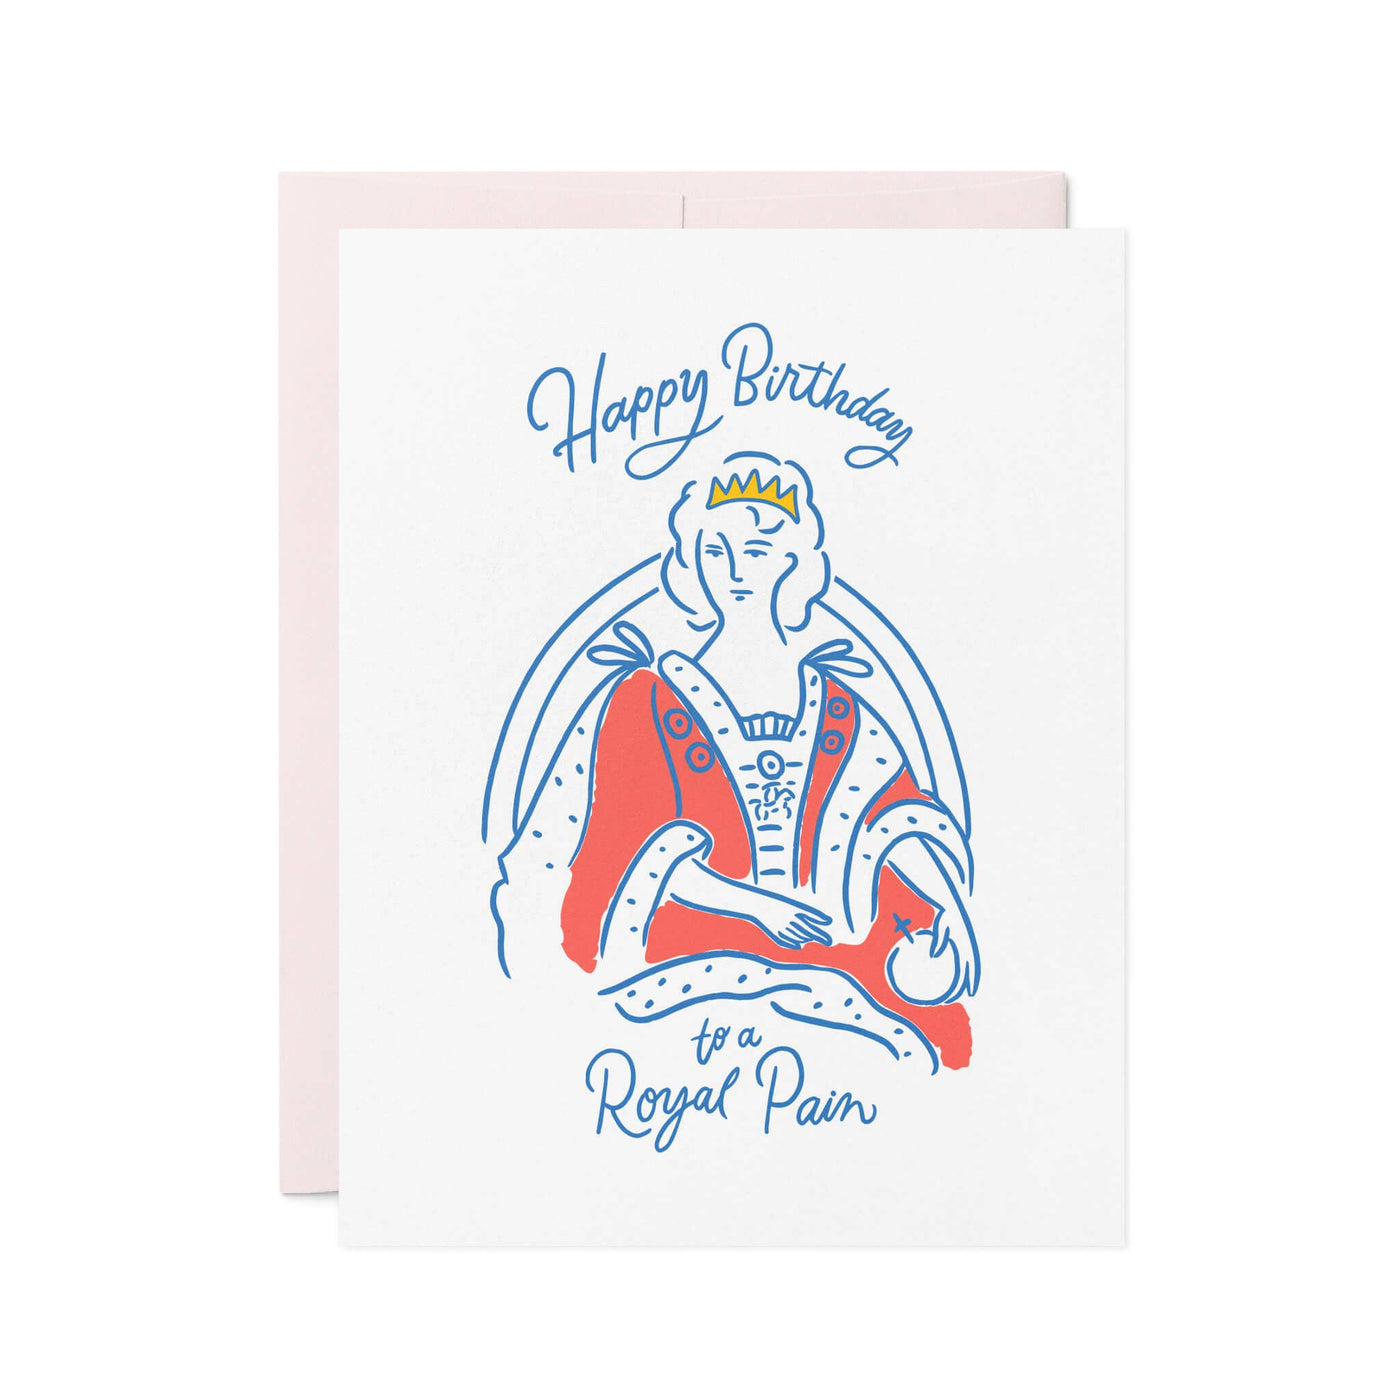 Royal Pain Letterpress Birthday Card